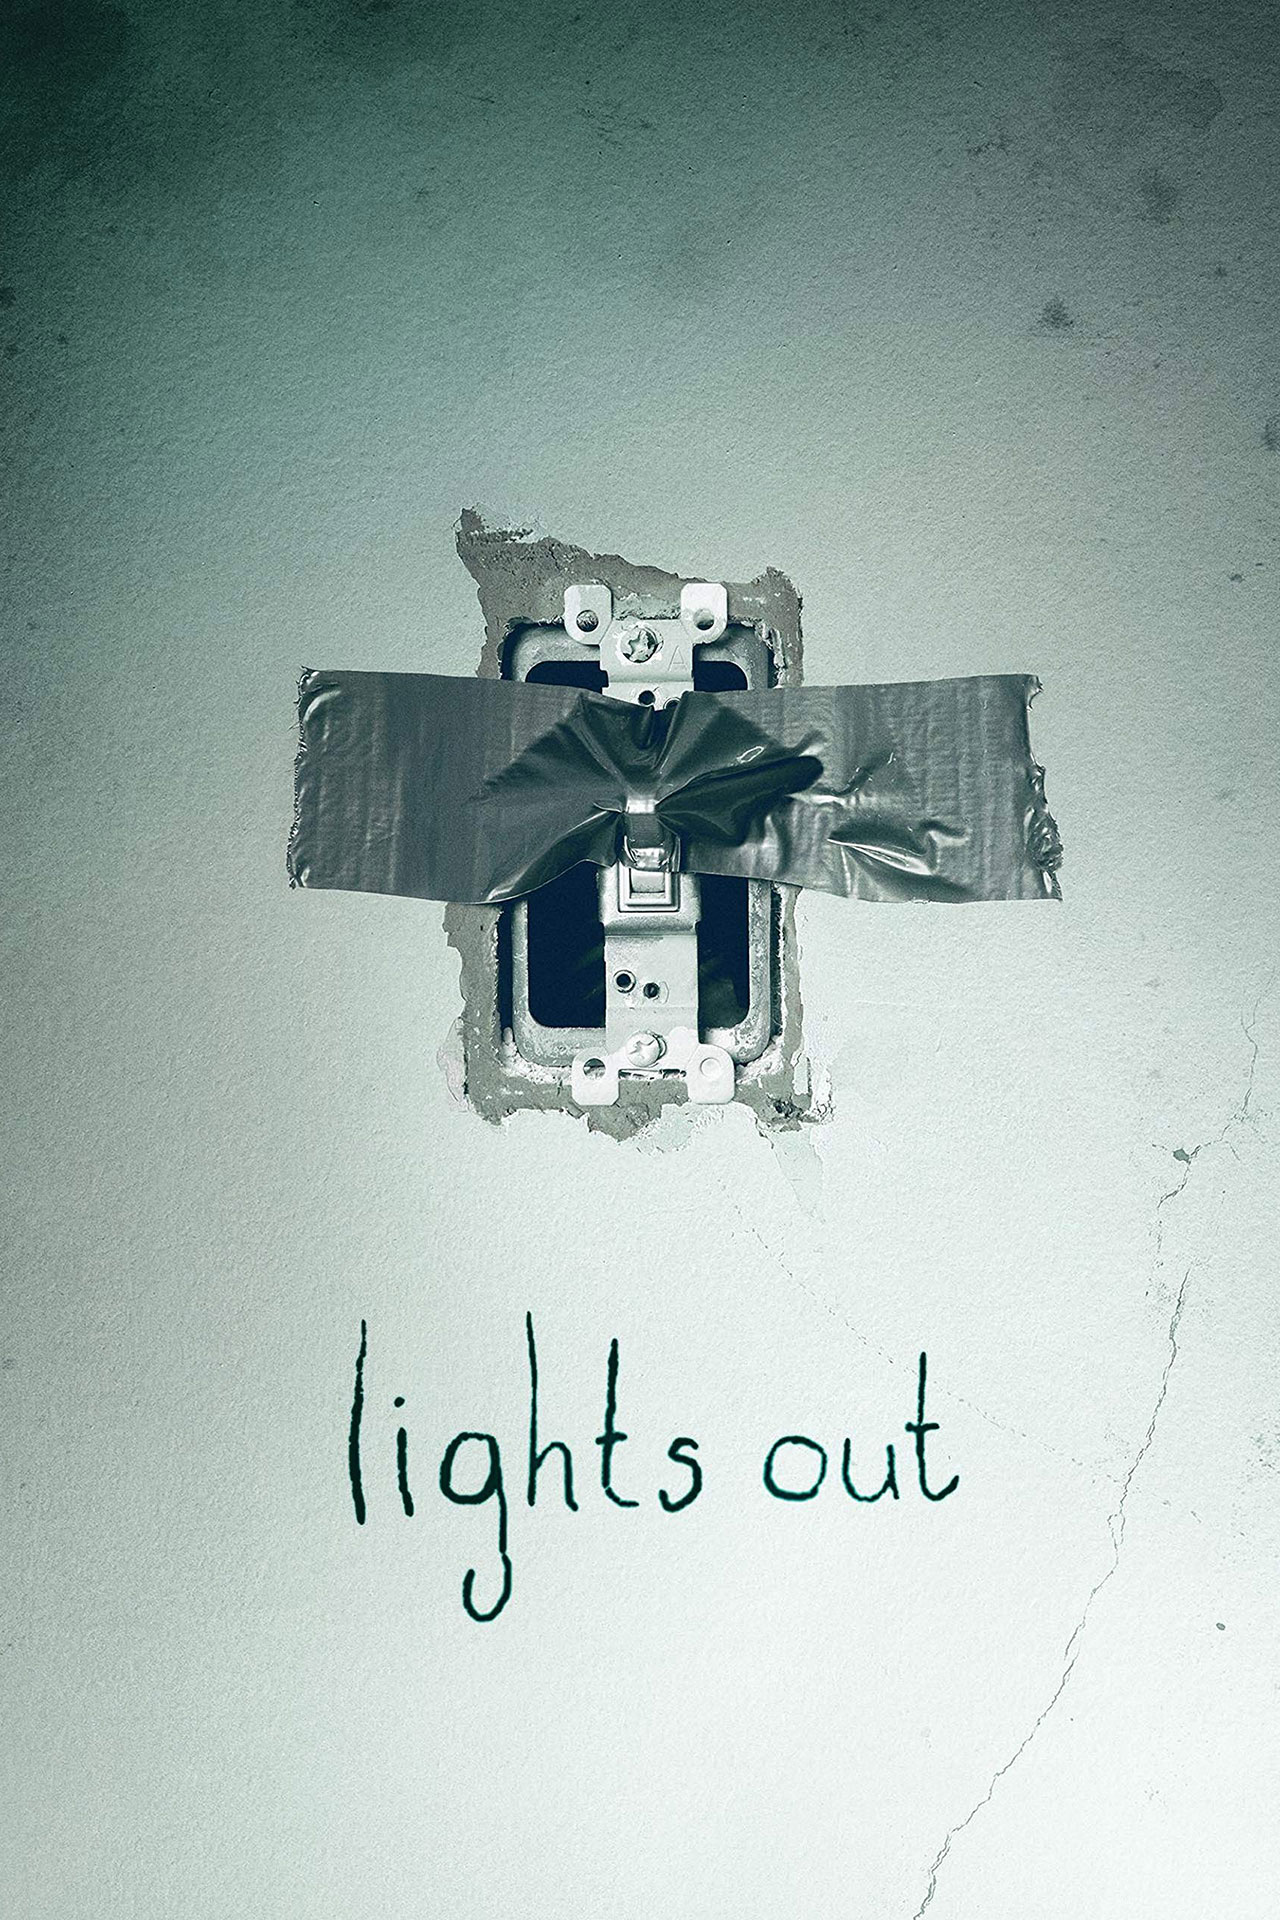 lightsout_web